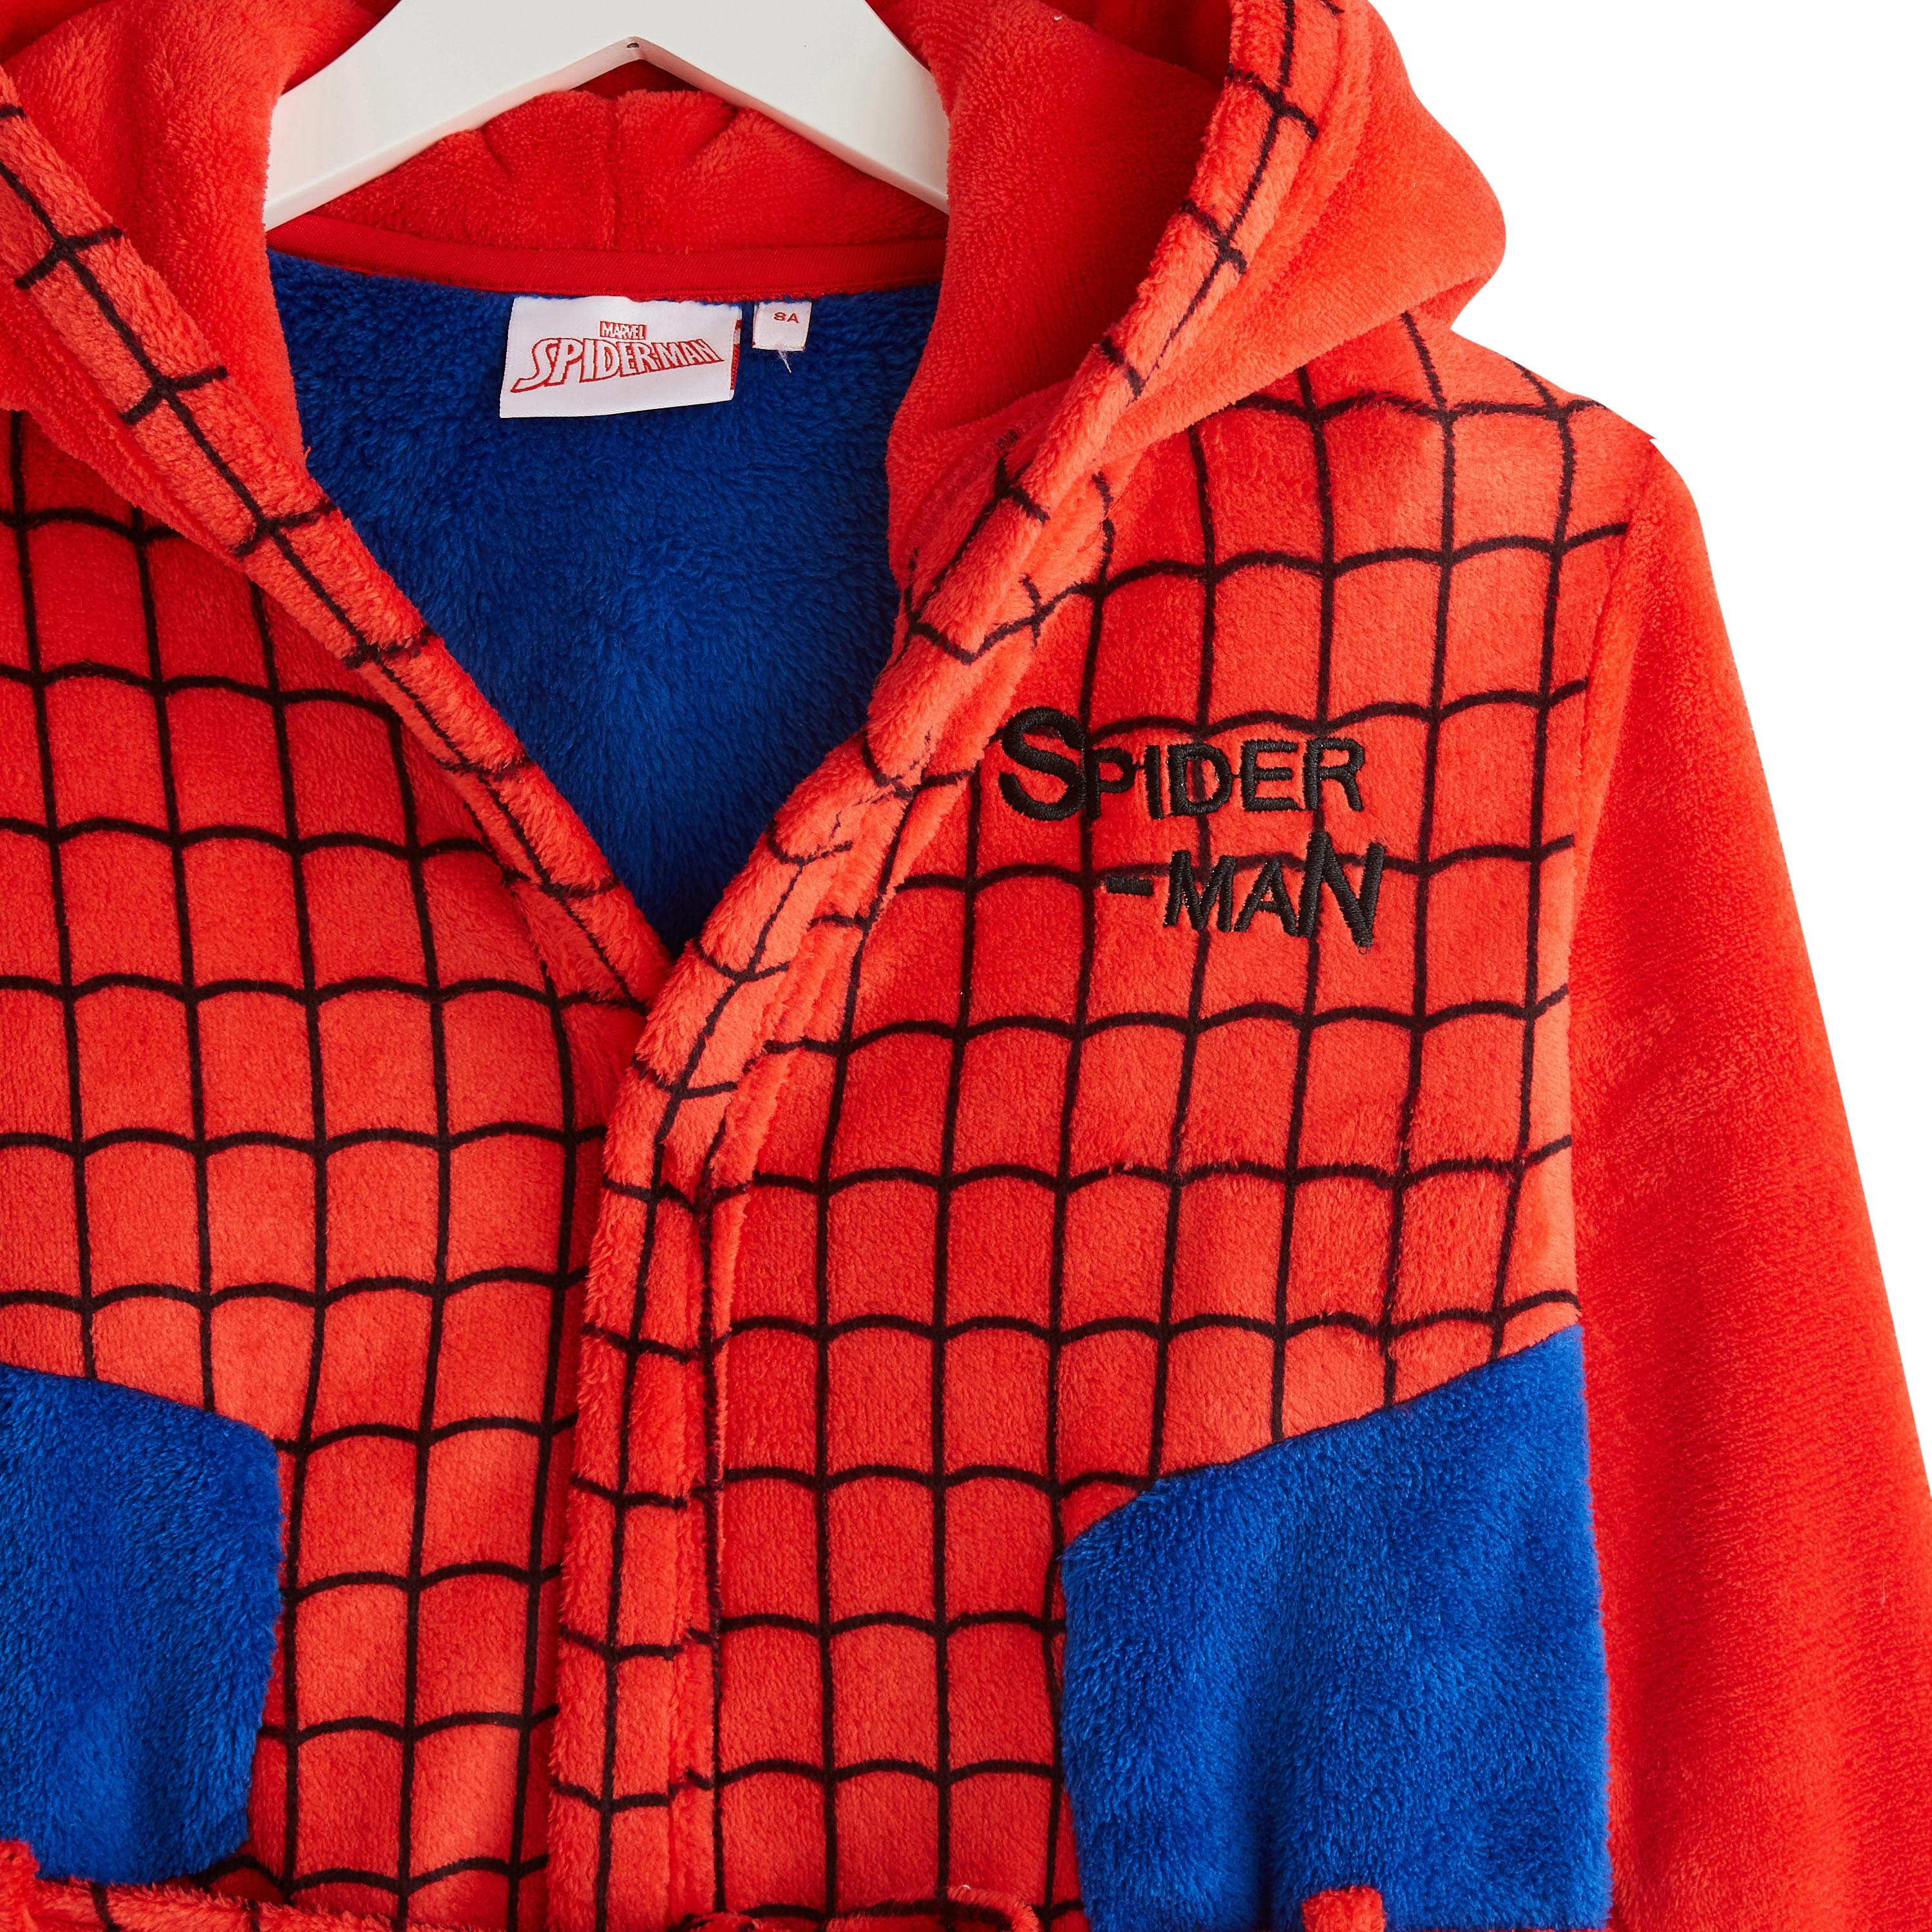 Robe De Chambre Garçon Spiderman